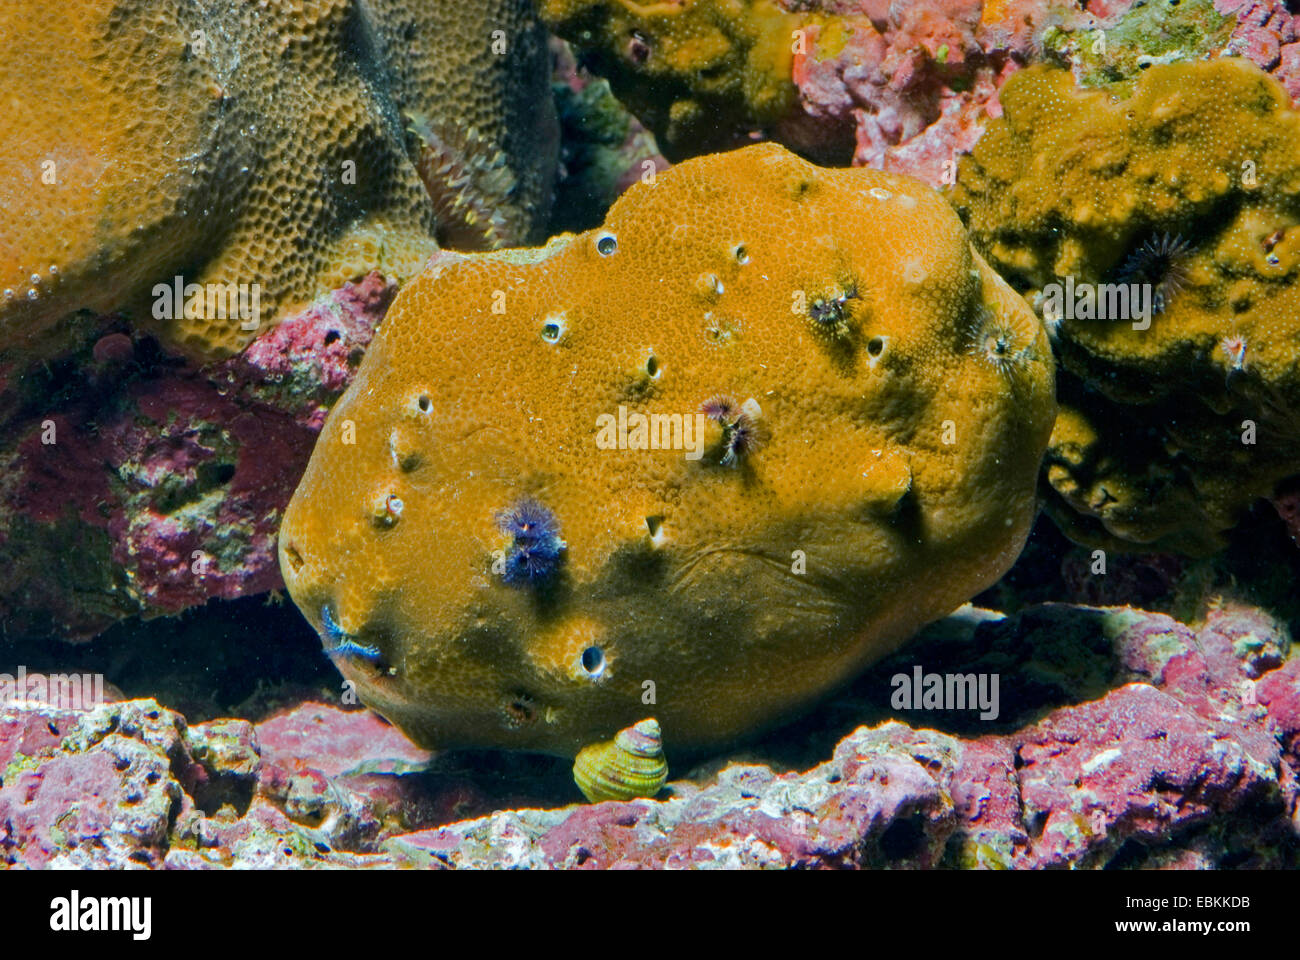 Stony Coral (Porites mayeri), side view Stock Photo